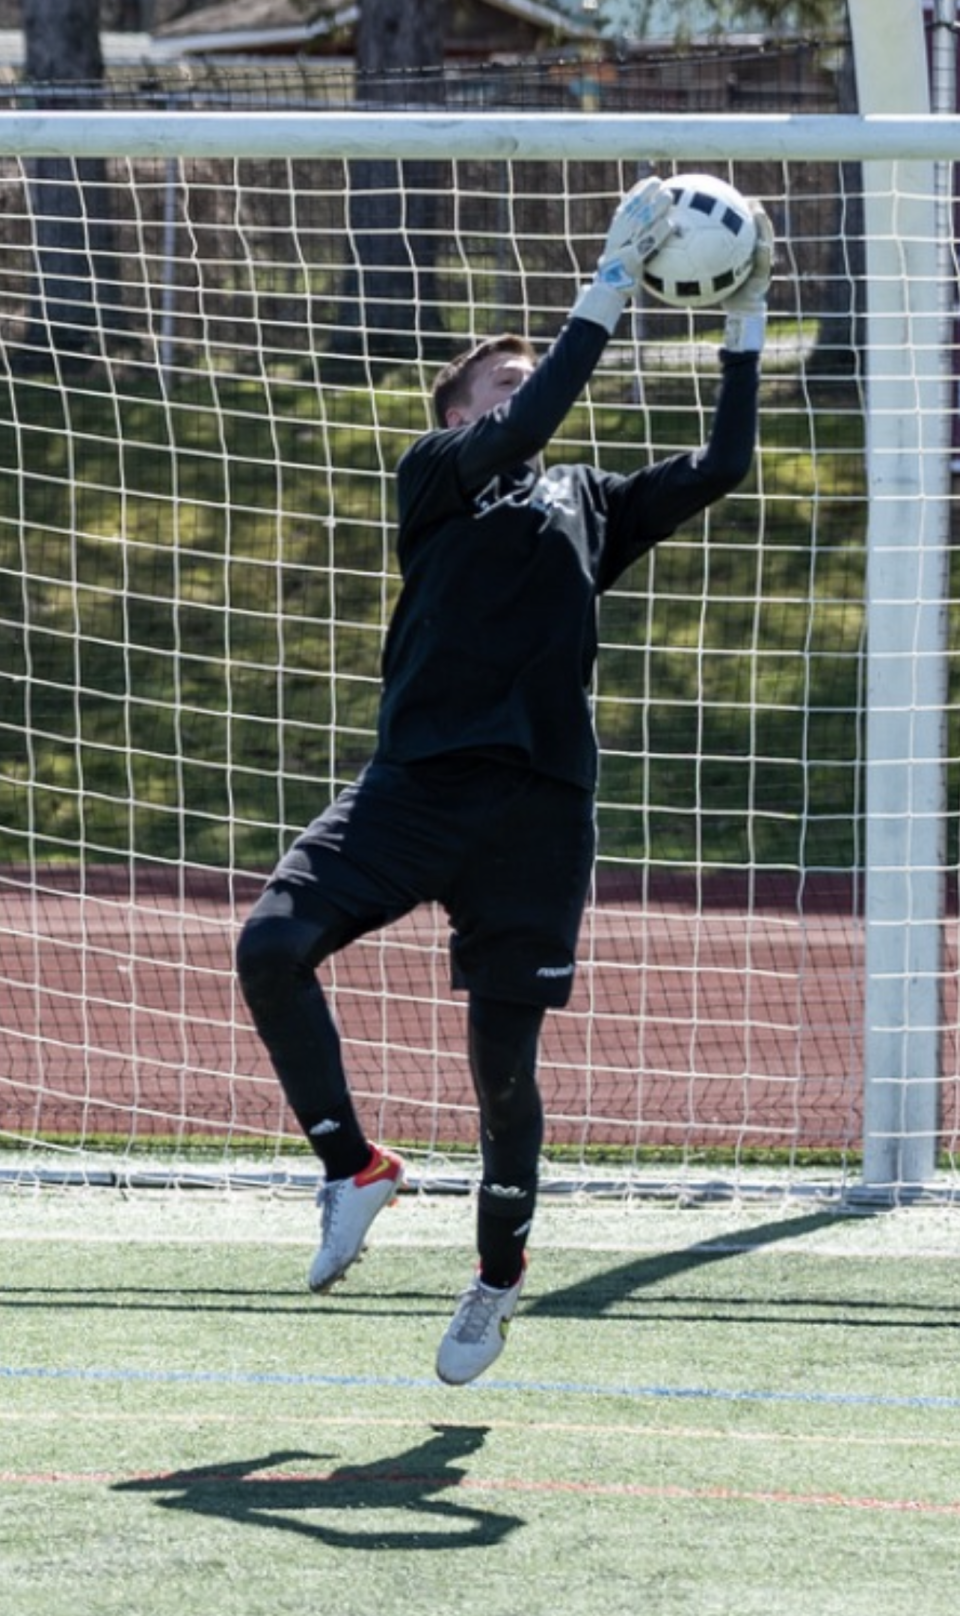 Marlboro goalkeeper Alex McAteer is photographed making a save.